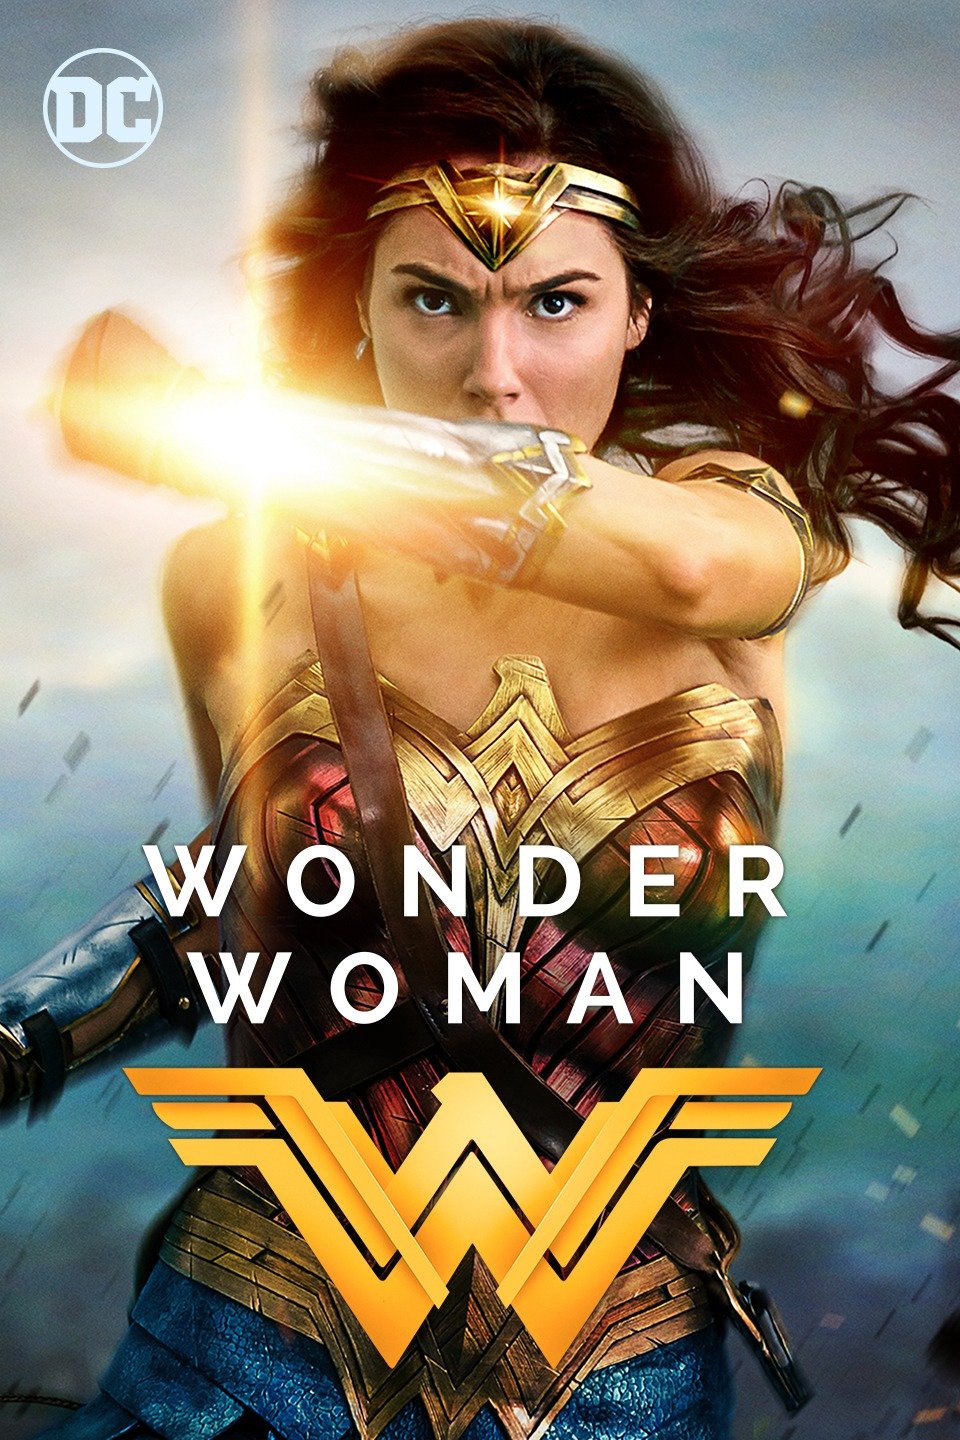 [MINI Super-HQ] Wonder Woman (2017) วันเดอร์ วูแมน [Master] [1080p] [พากย์ไทย 5.1 + อังกฤษ DTS] [BrRip.DTS.x264] [ซับไทย + อังกฤษ] [ONE2UP]